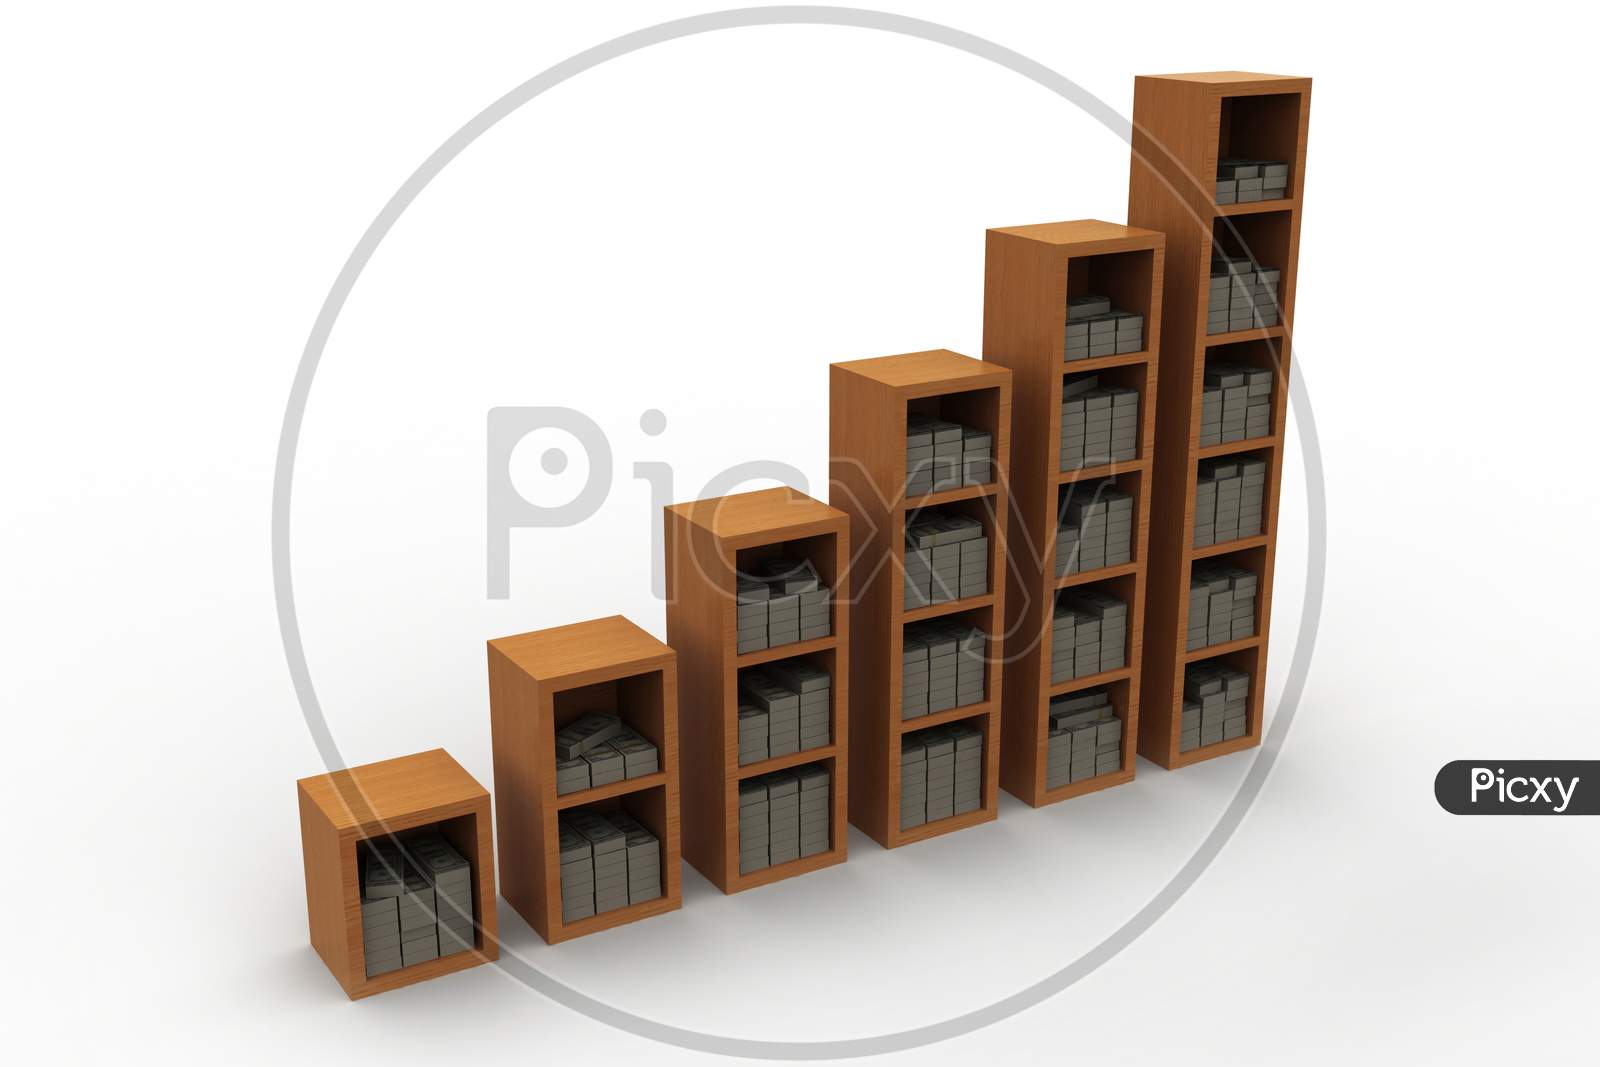 Books On A Wooden Shelf